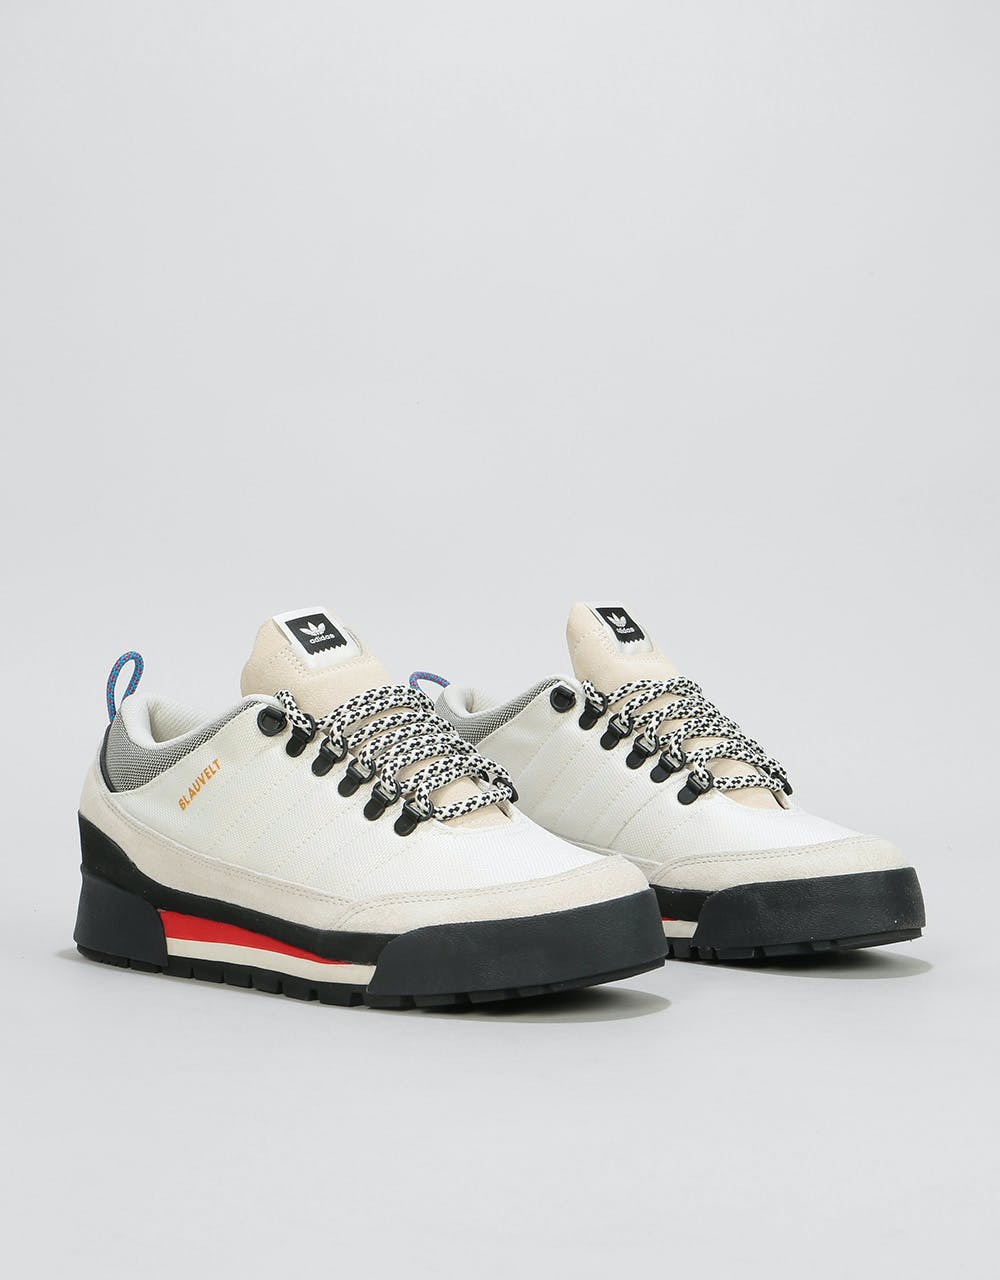 Adidas Jake Boot 2.0 Low - Off White/Raw White/Core Black